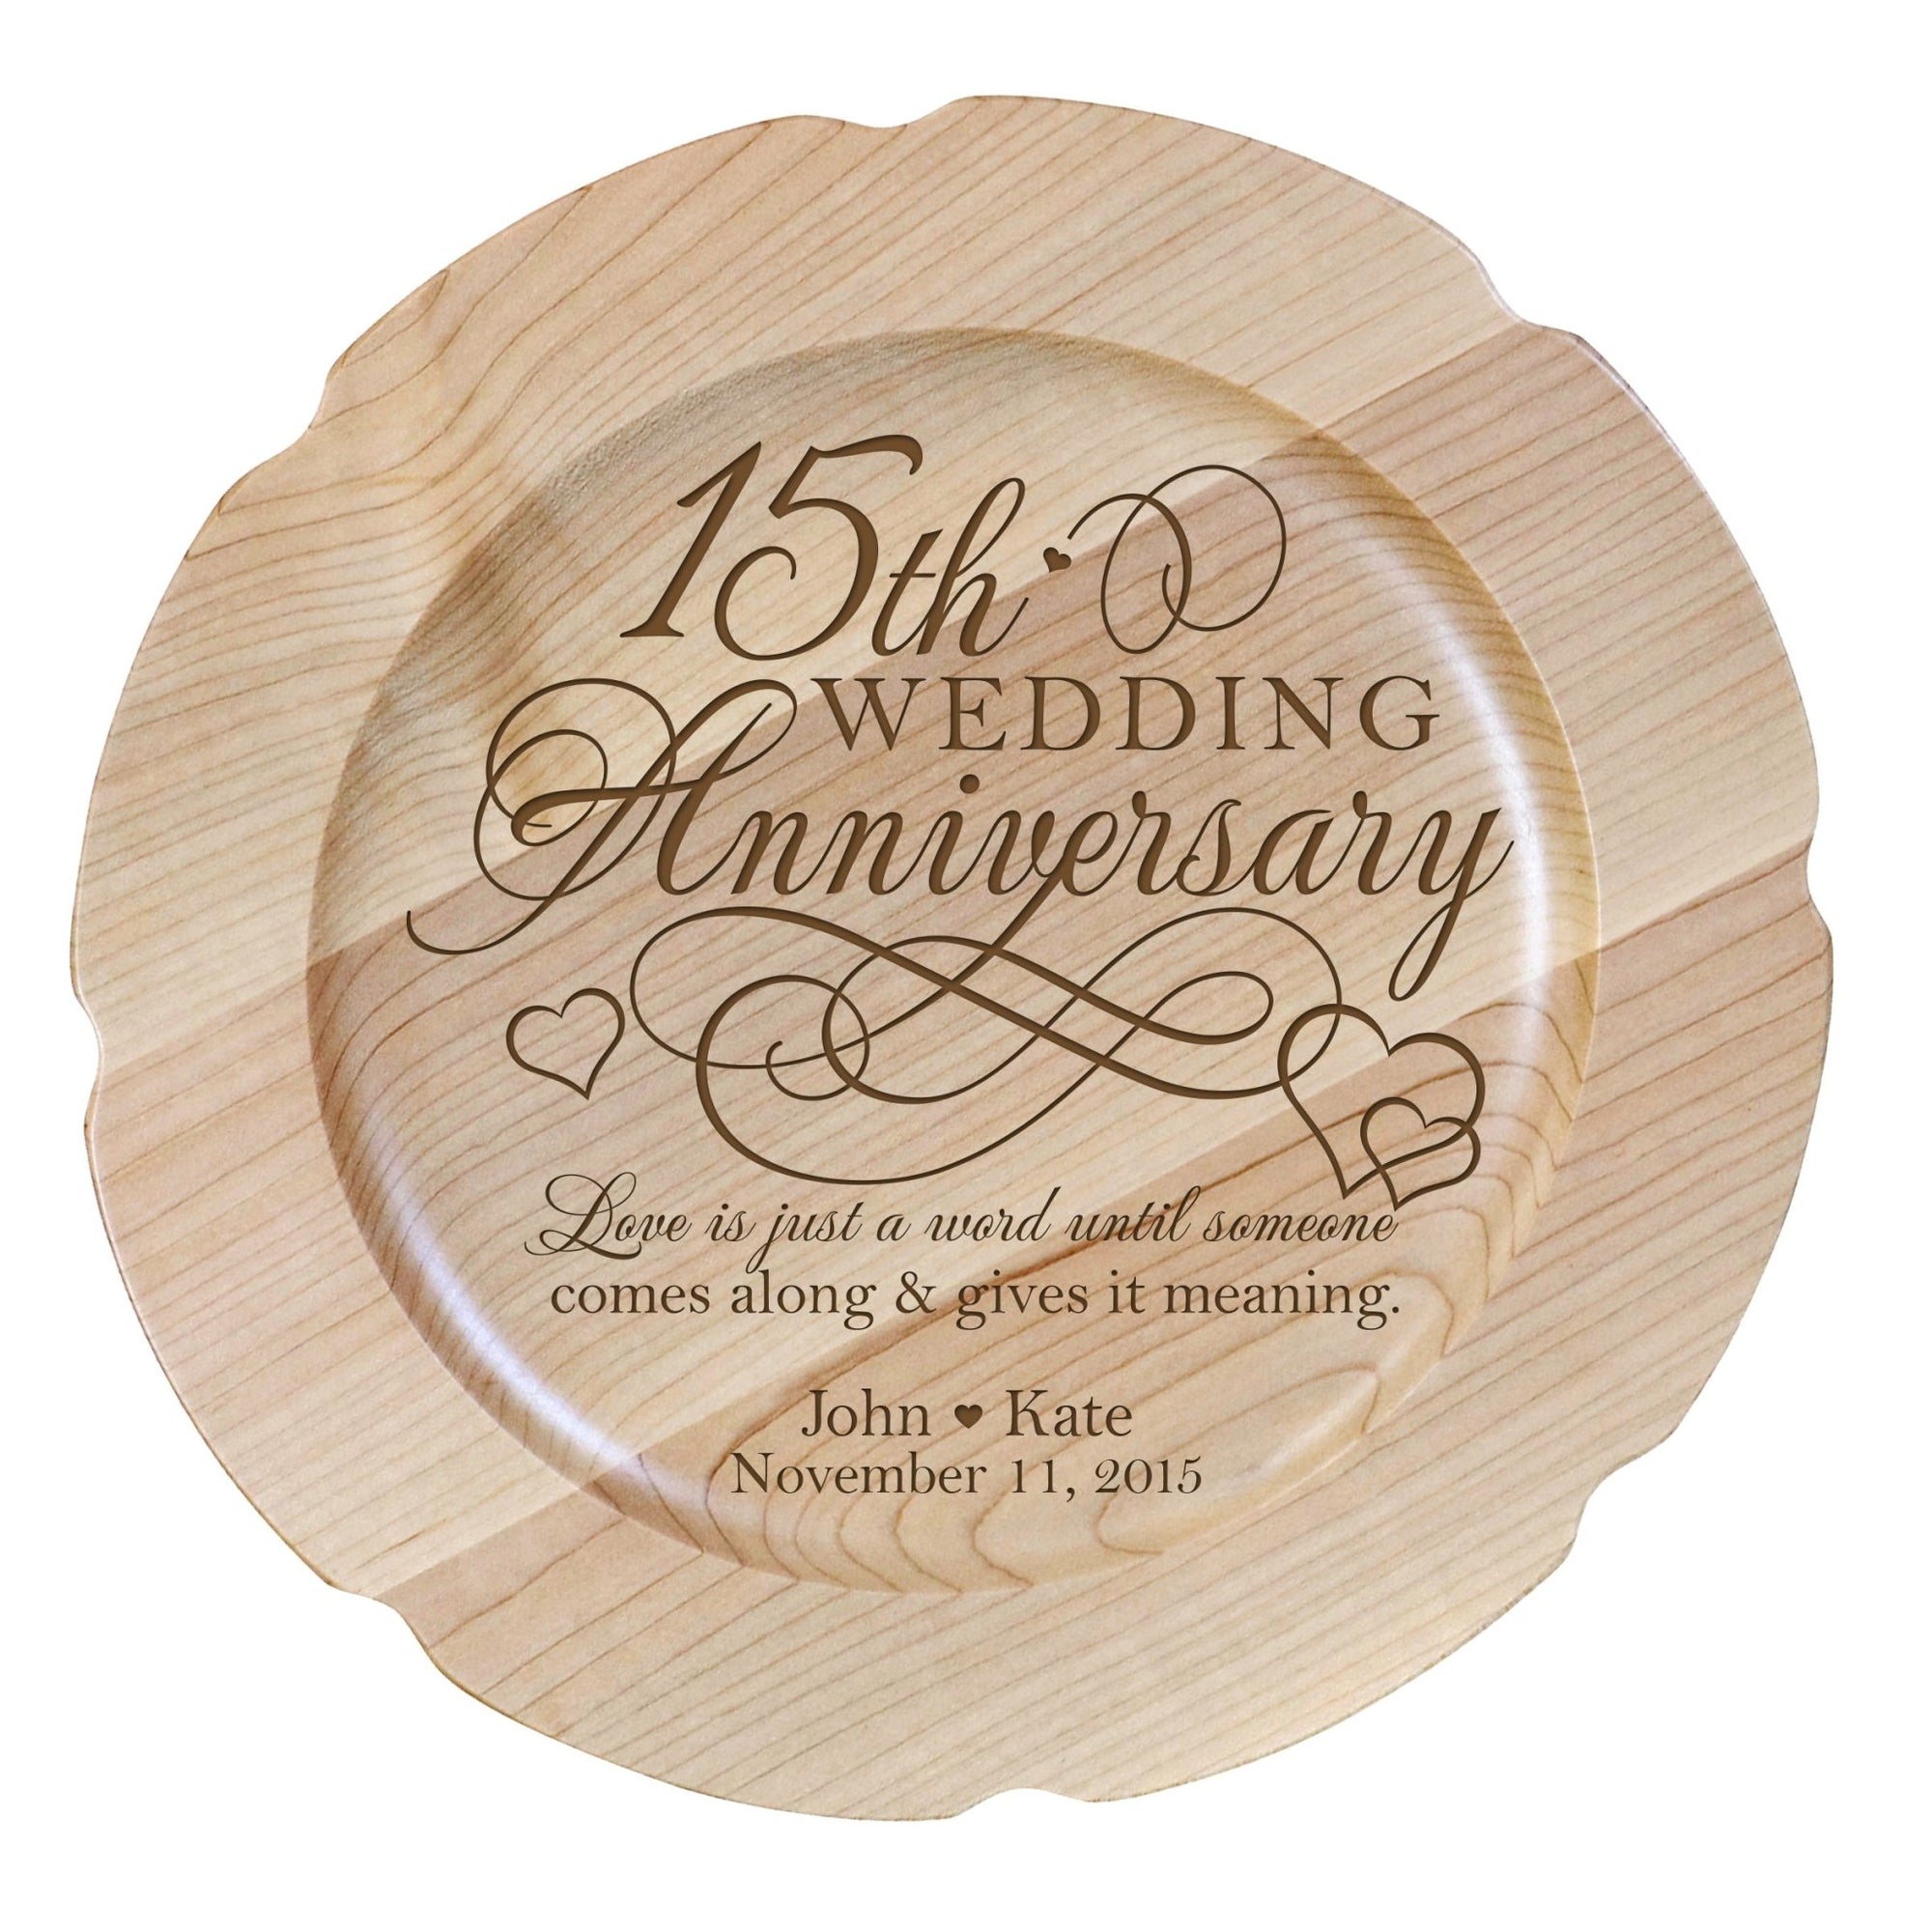 Personalized 15th Wedding Anniversary Decorative Plate - Celebrating - LifeSong Milestones